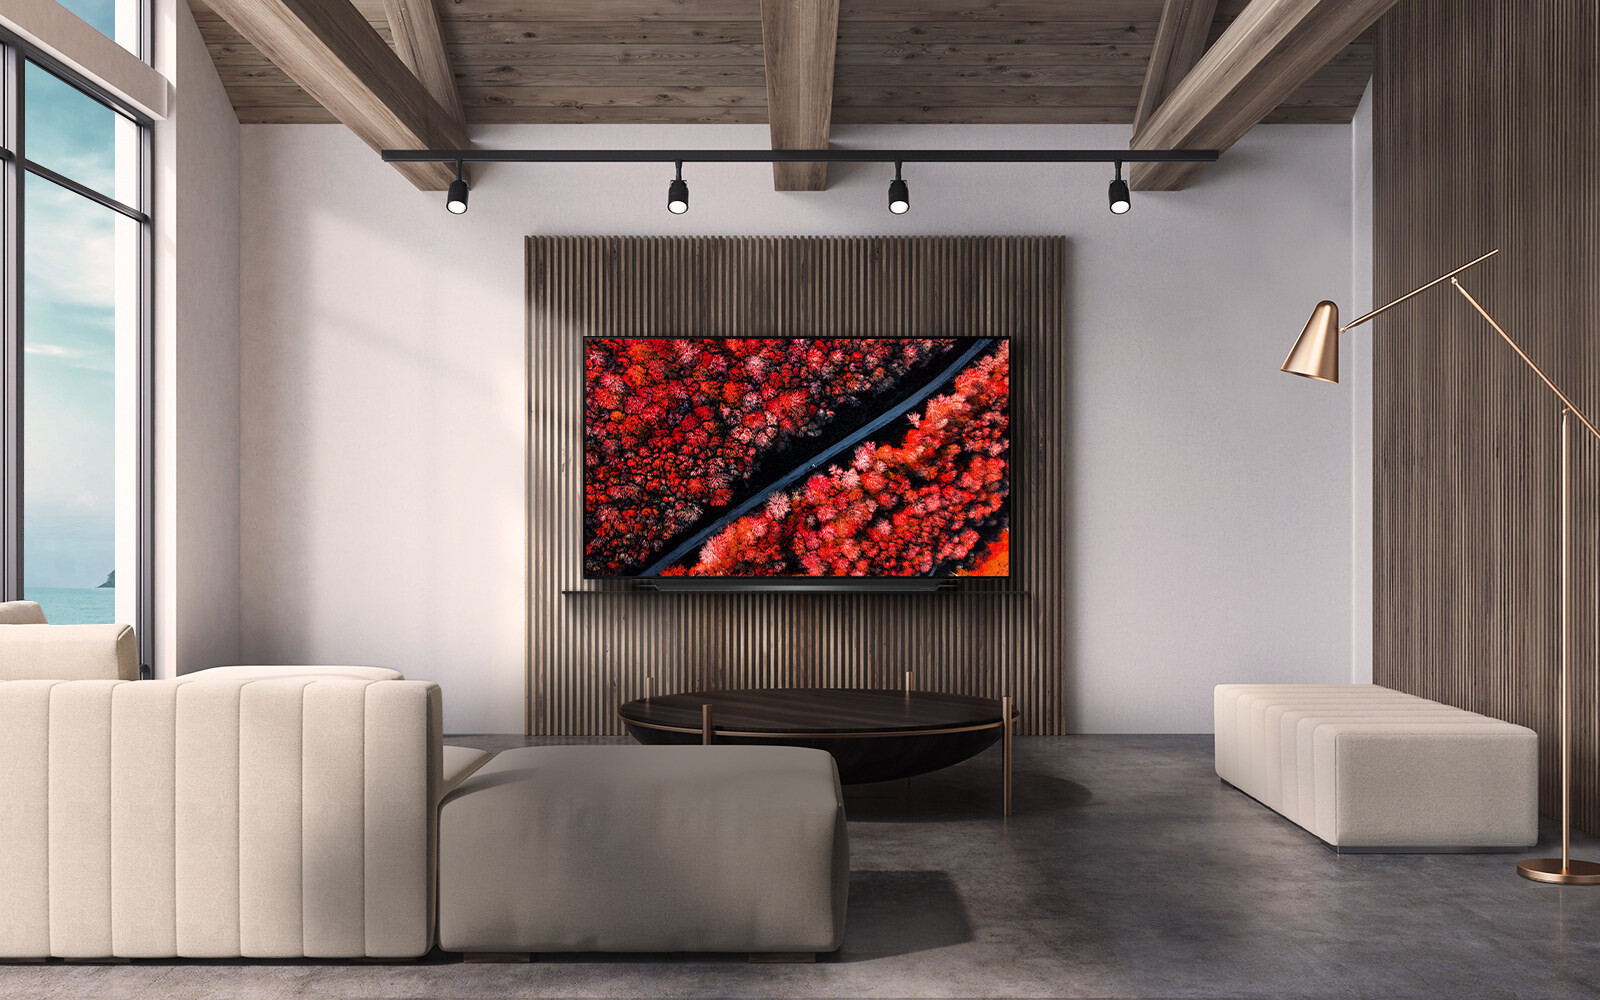 LG unveils its Black Friday sale on 2019 OLED TVs - www.semadata.org News